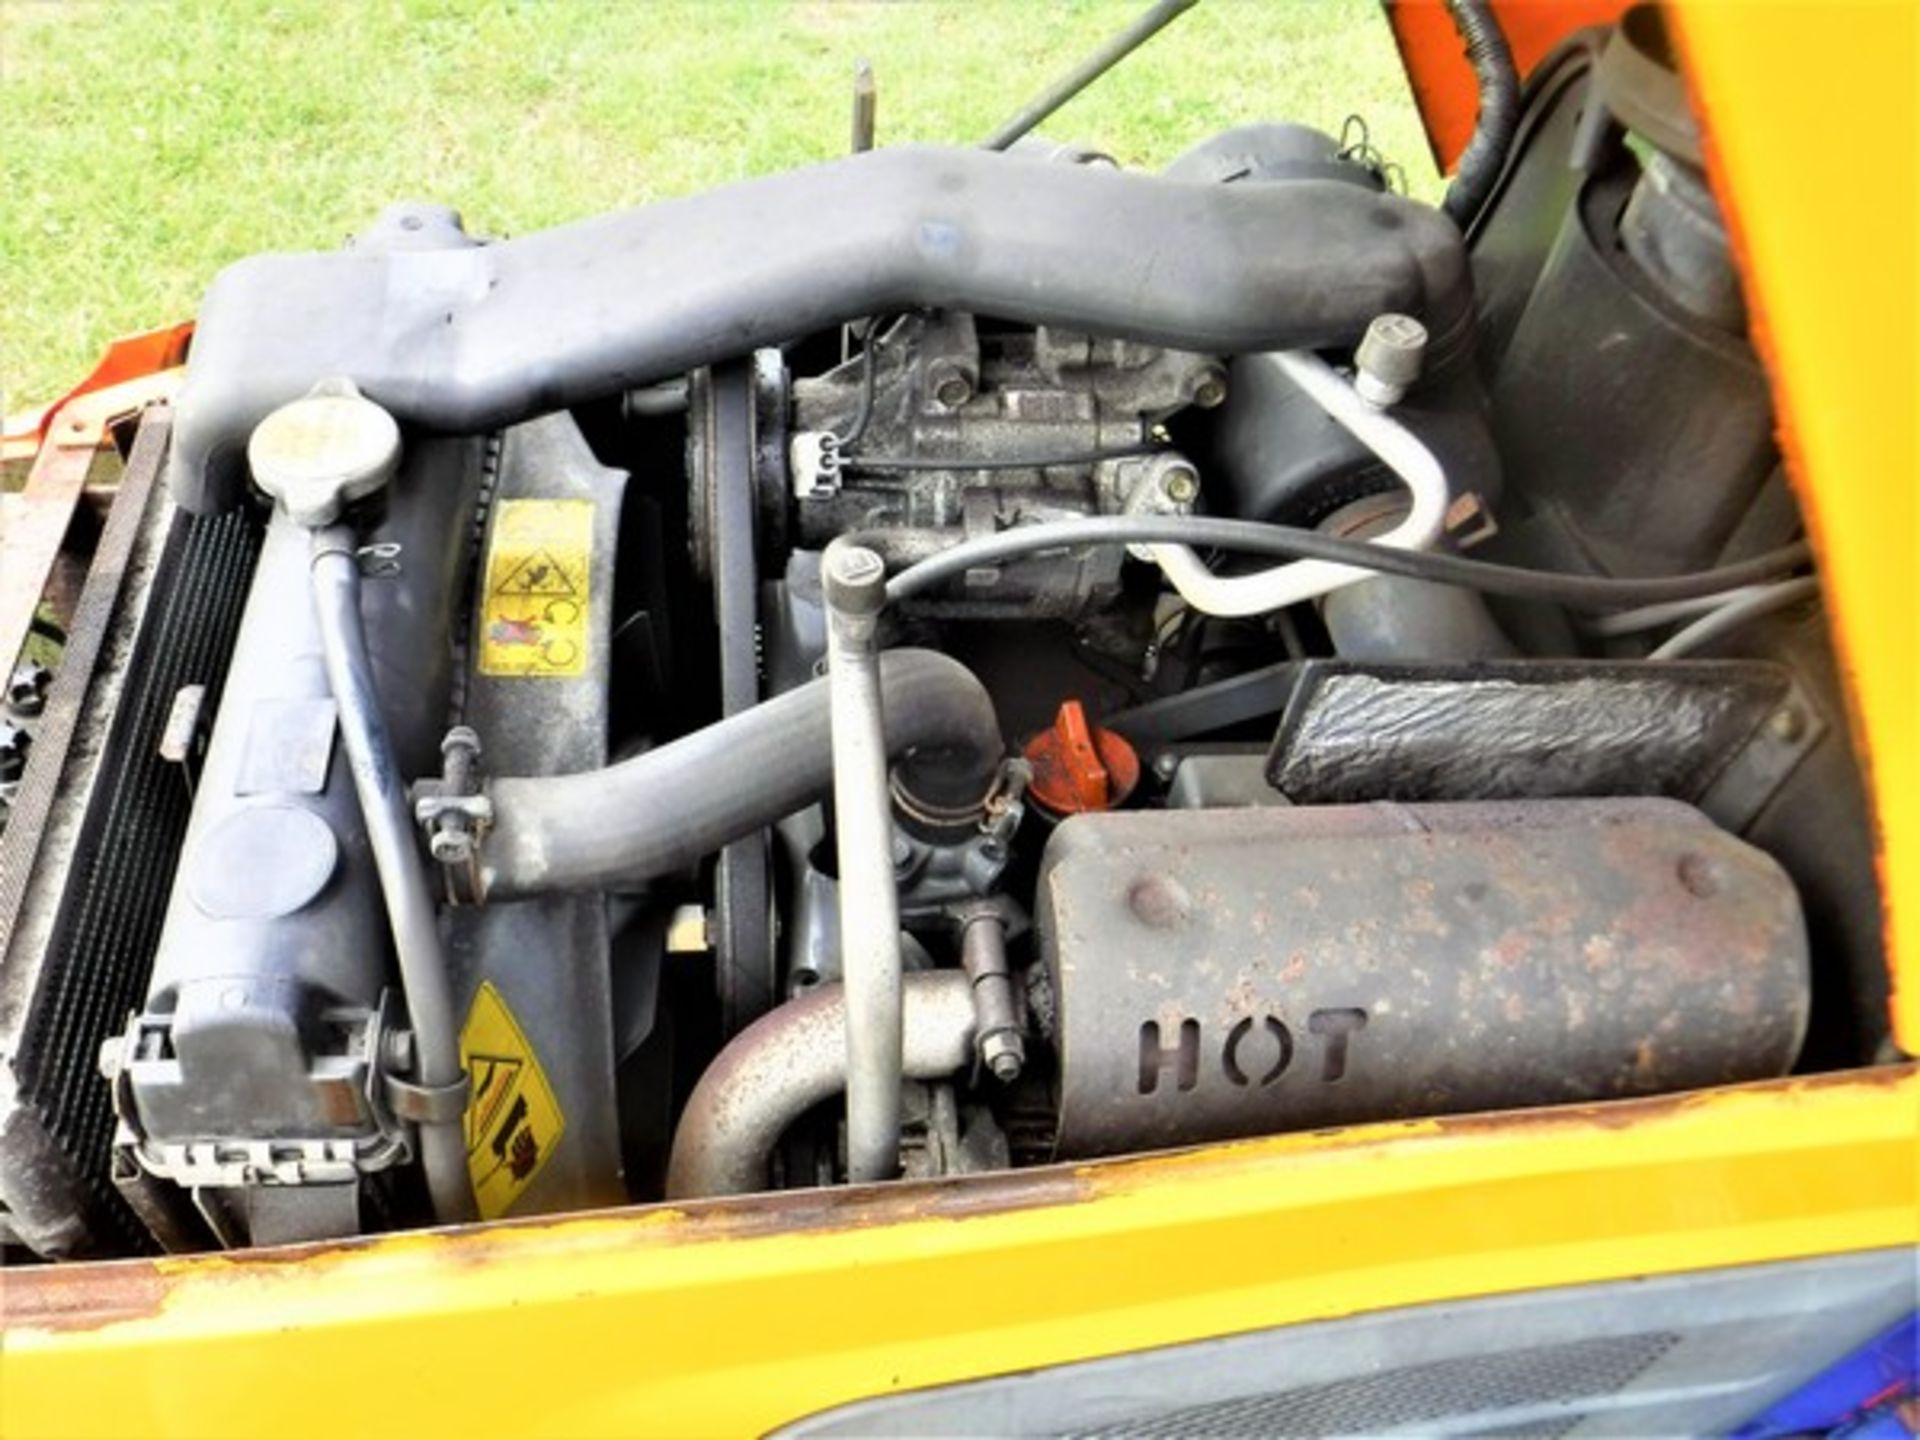 2008 KUBOTA B5 mini tractor c/w mounted PTO driven D W Tomlin salt spreader Reg No SN58 EVJ. ID No - - Image 2 of 19